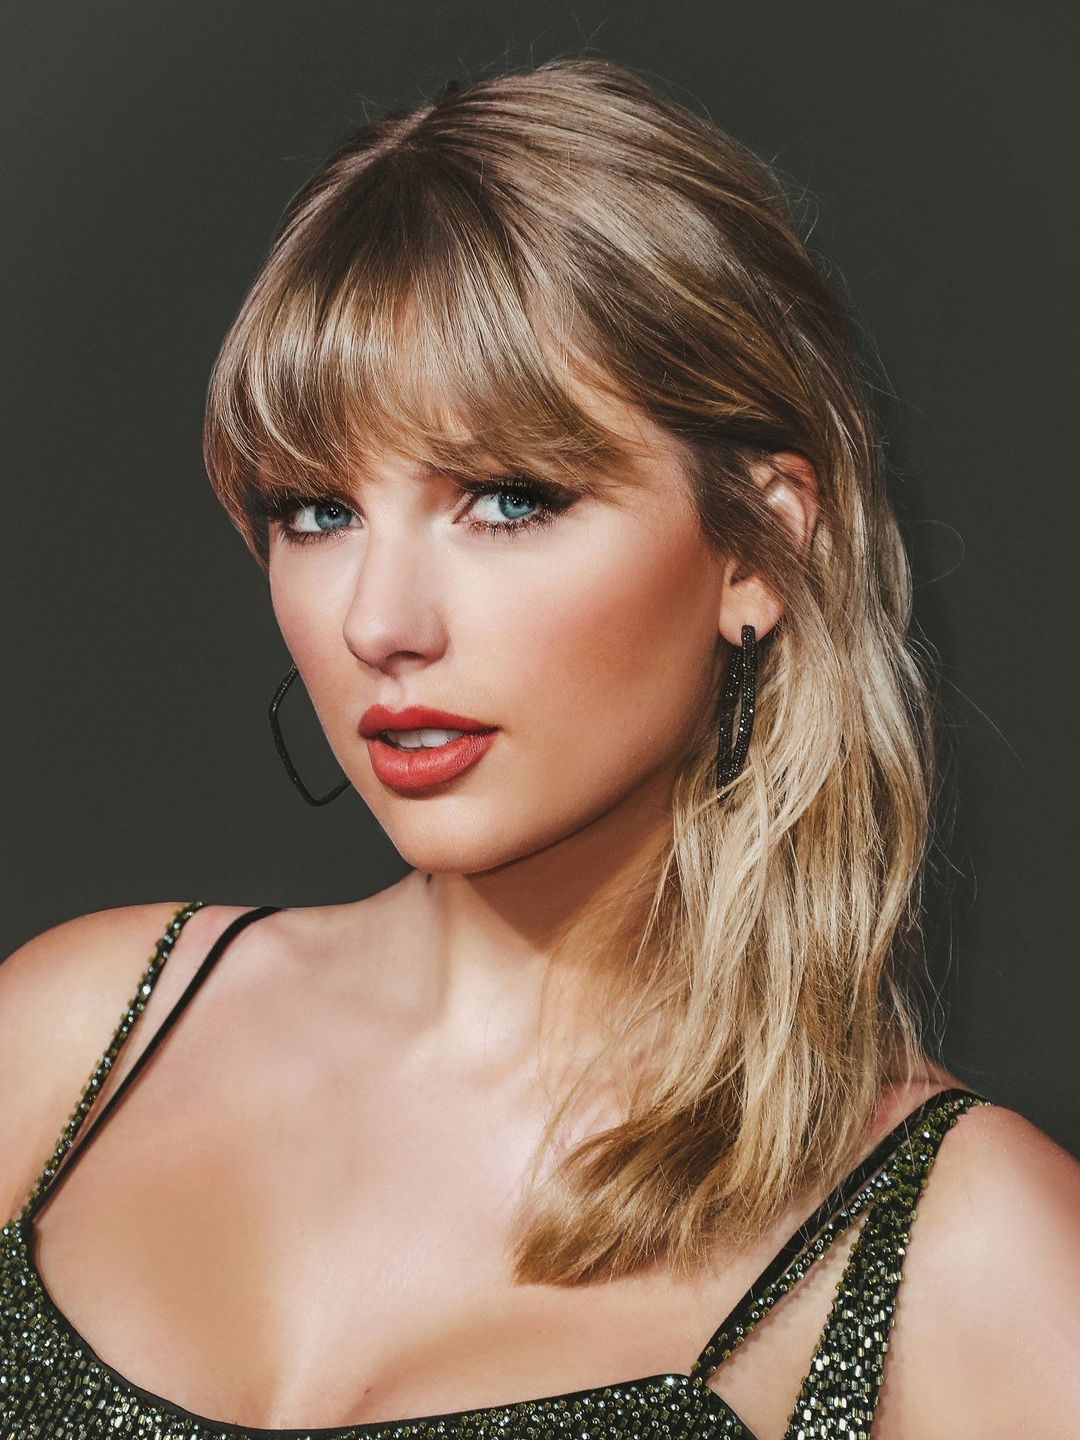 Taylor Swift biography